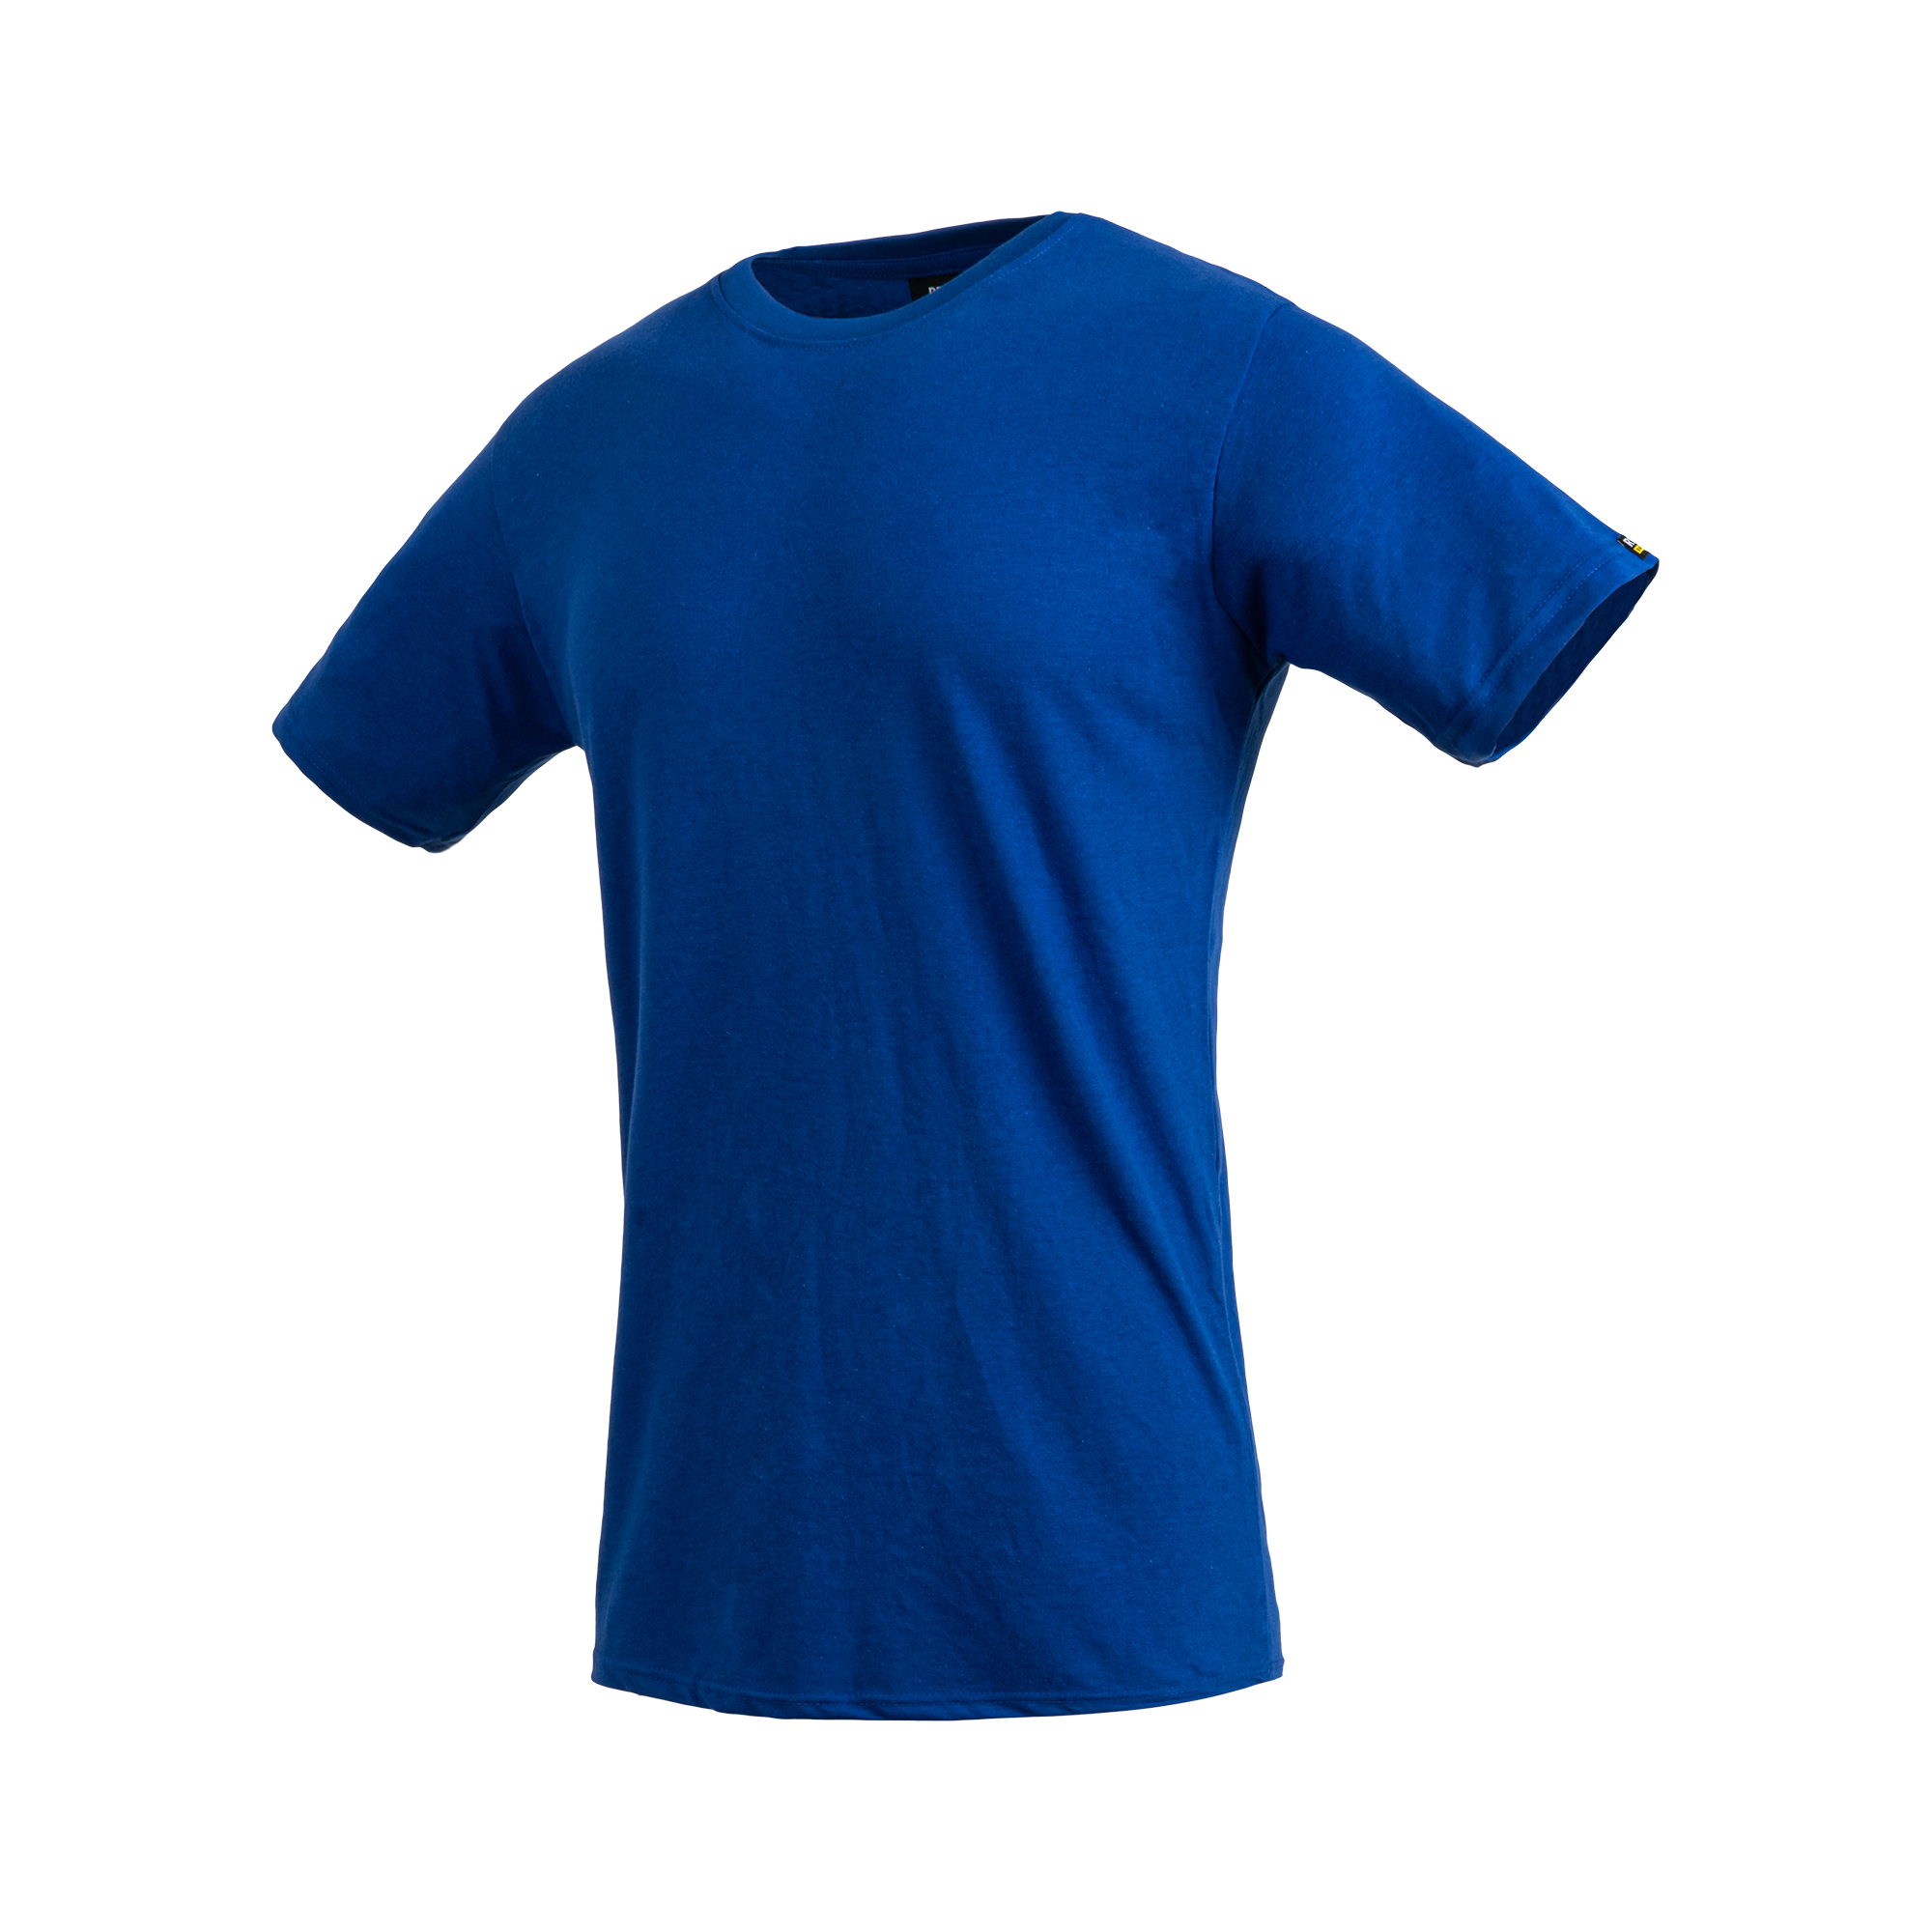 REBEL Work Wear T-Shirt Royal Blue - REBEL Safety Gear